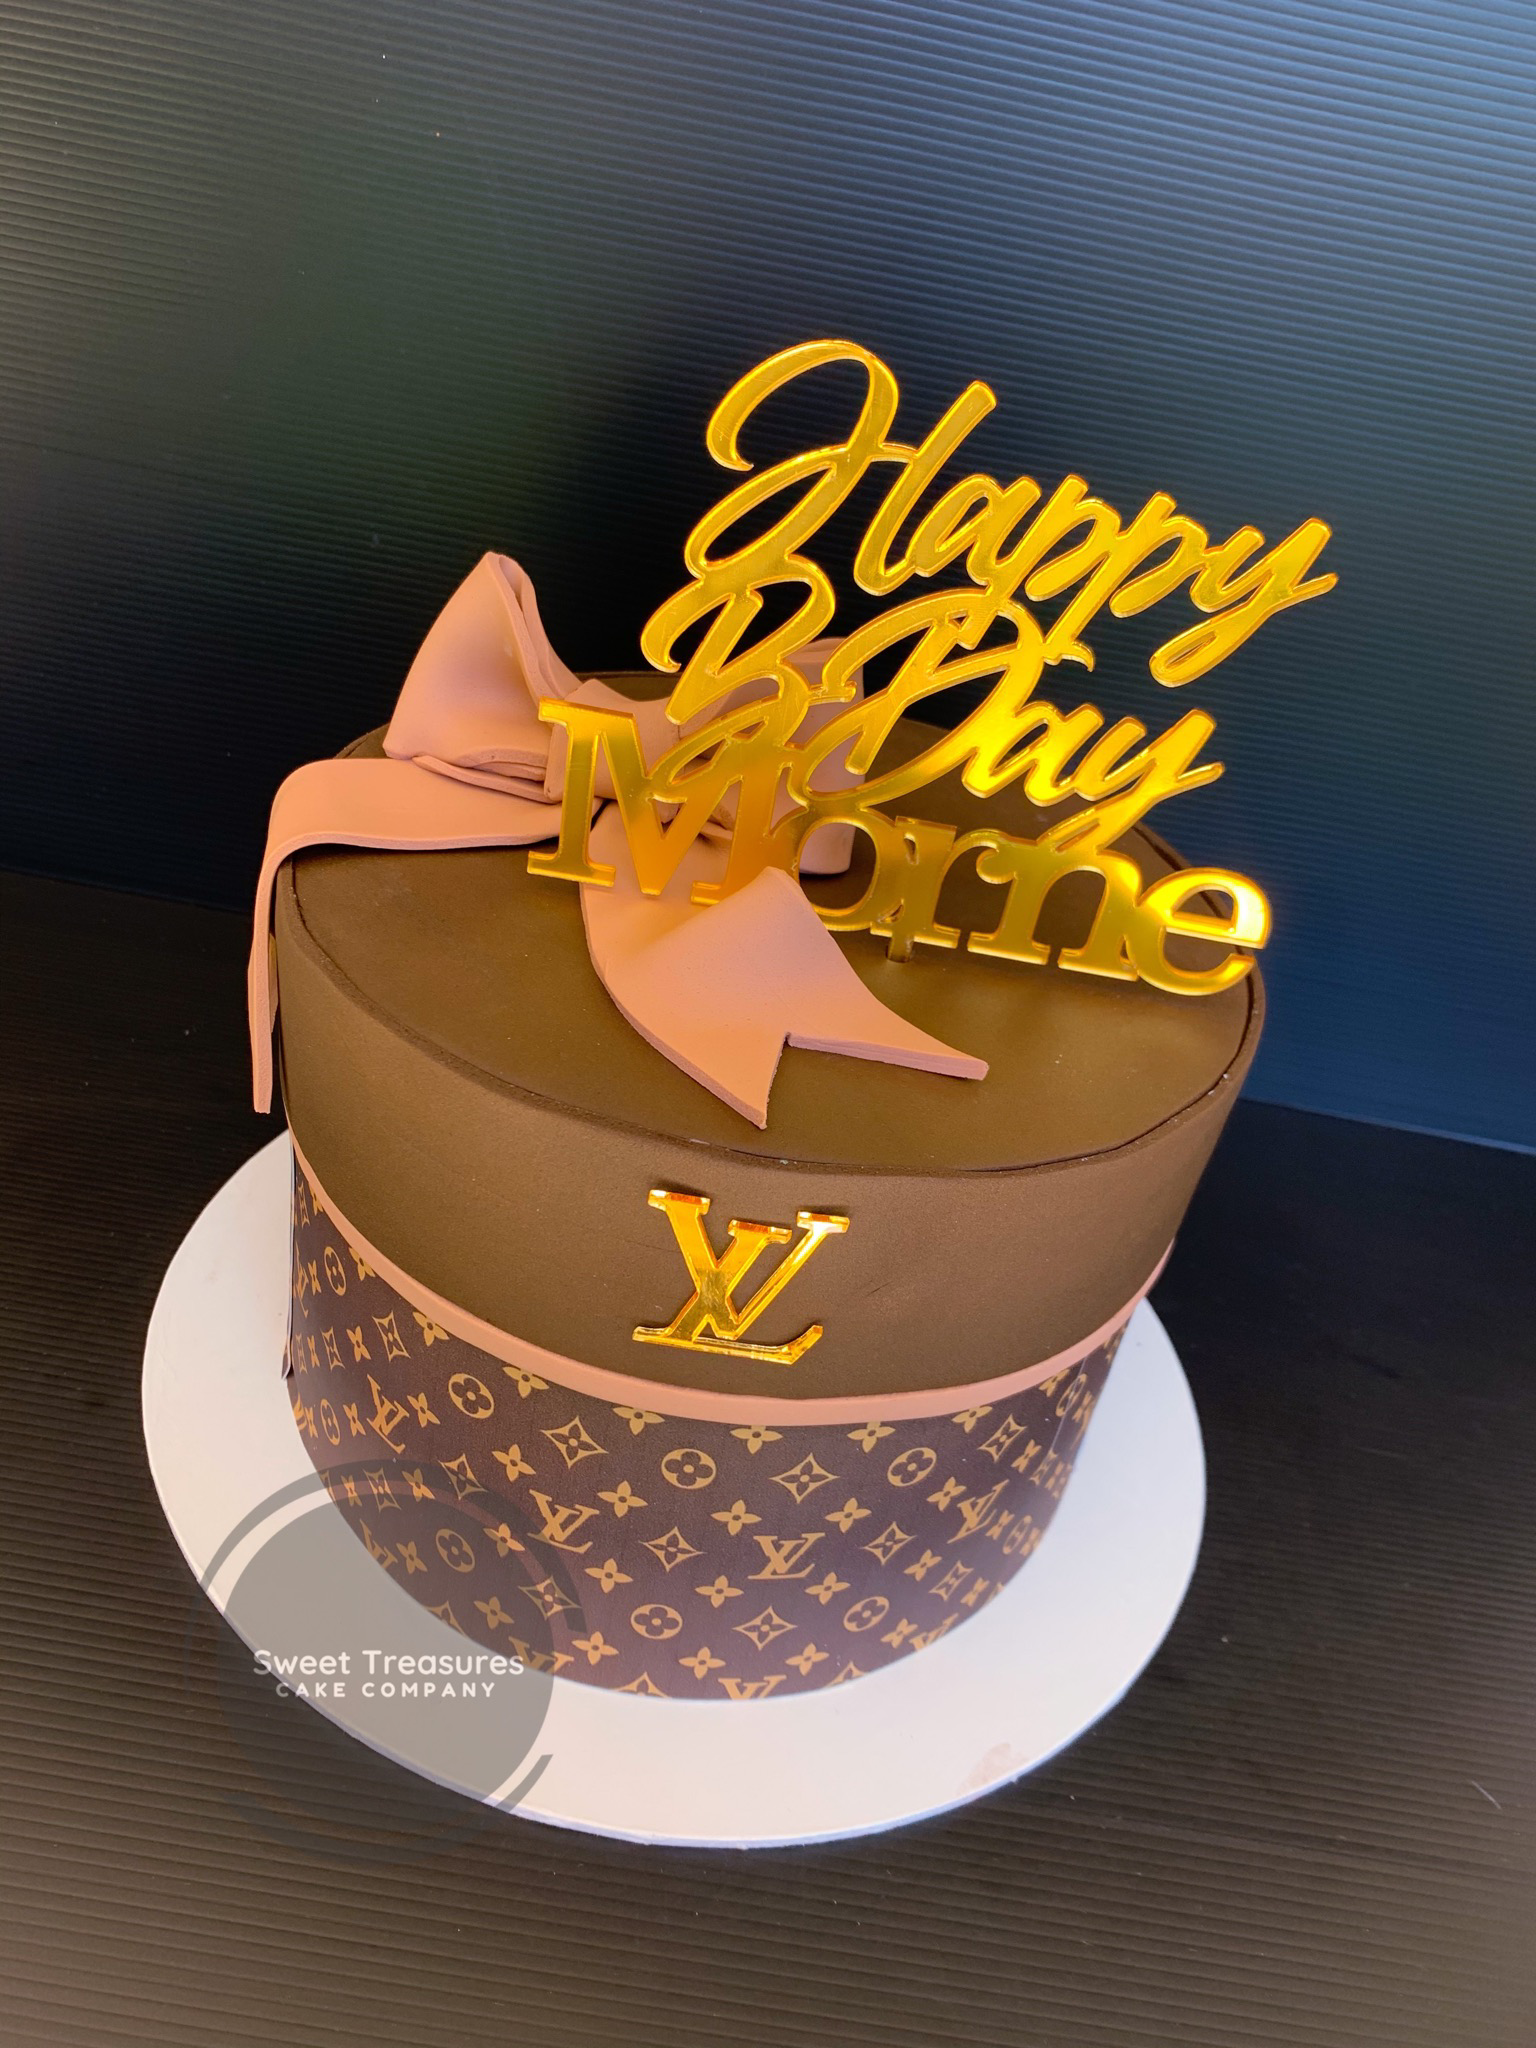 Sumptuous Treats on X: Louis Vuitton Gift Box Cake #customnecklace  #lvgiftboxcake #allediblecake #lvcake #customcakes #lvthemedcake  #freethegoat #fondantcakes #3dcakes #rolexcaketopper #customjewelery  #torontocakes #customediblejewelery